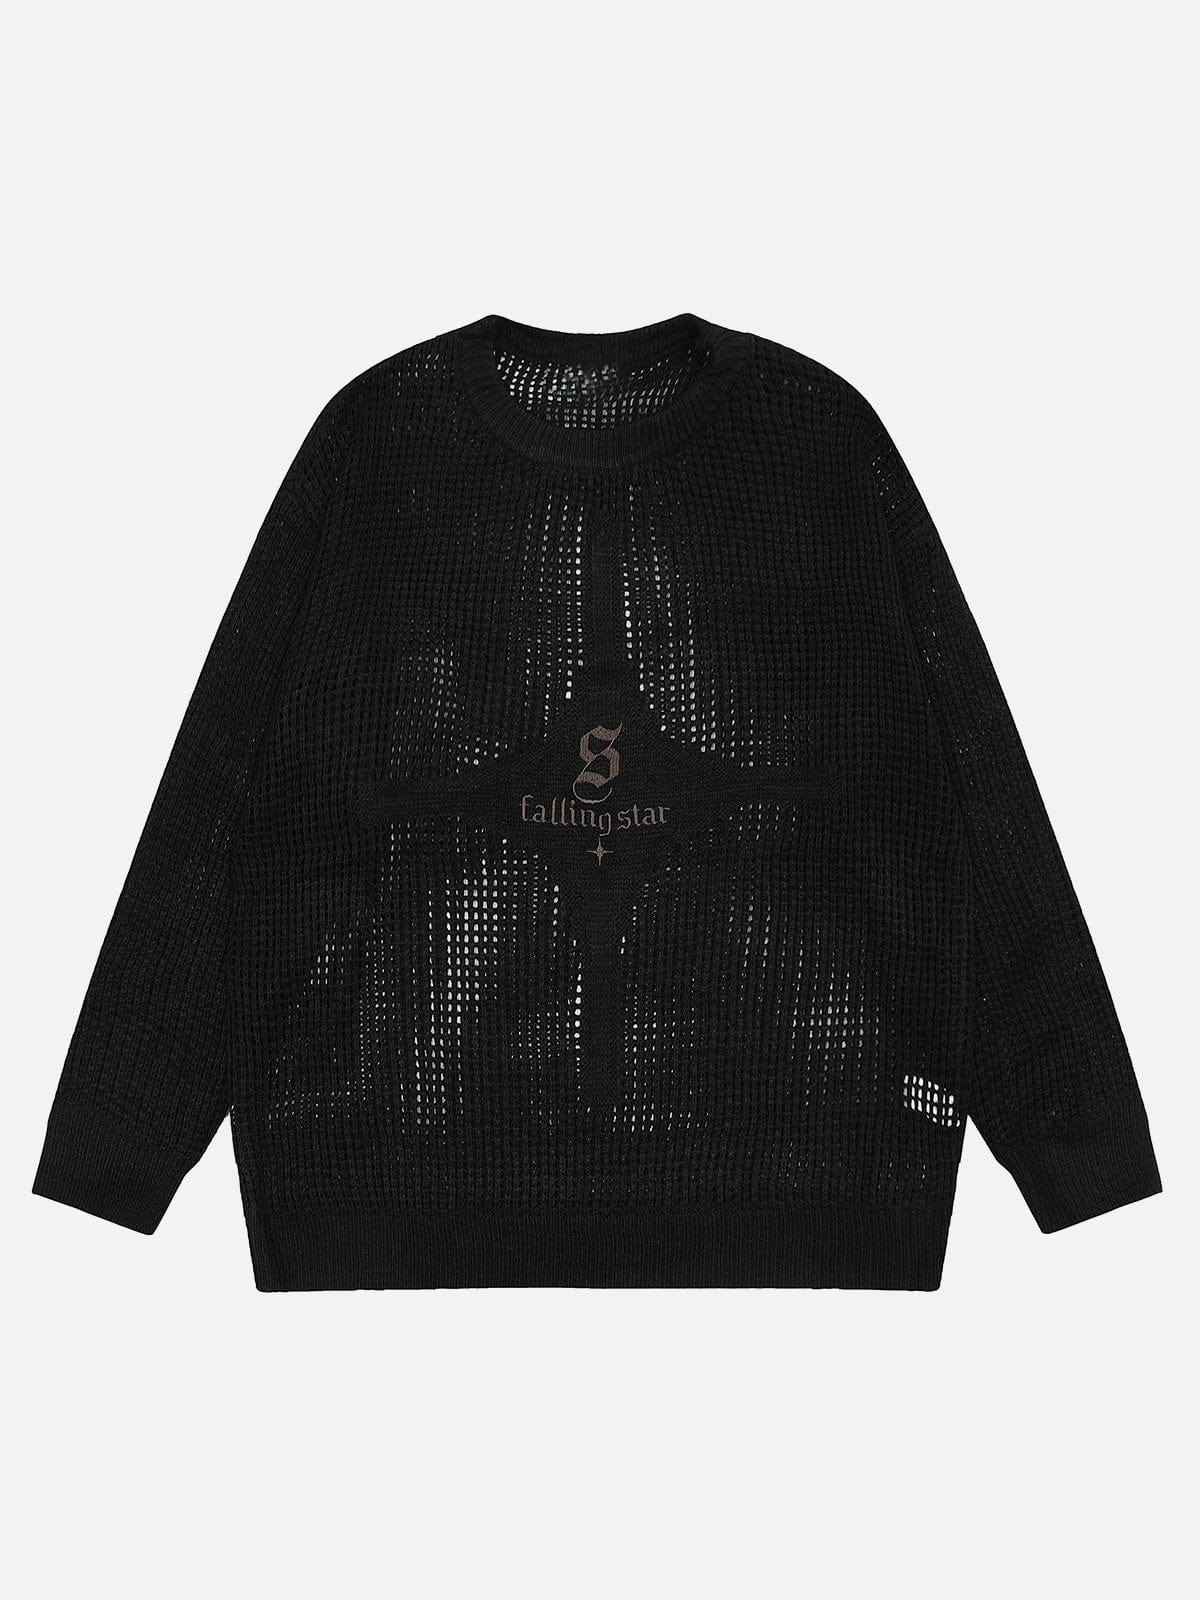 NEV Star Hollow Fabric Sweatshirt